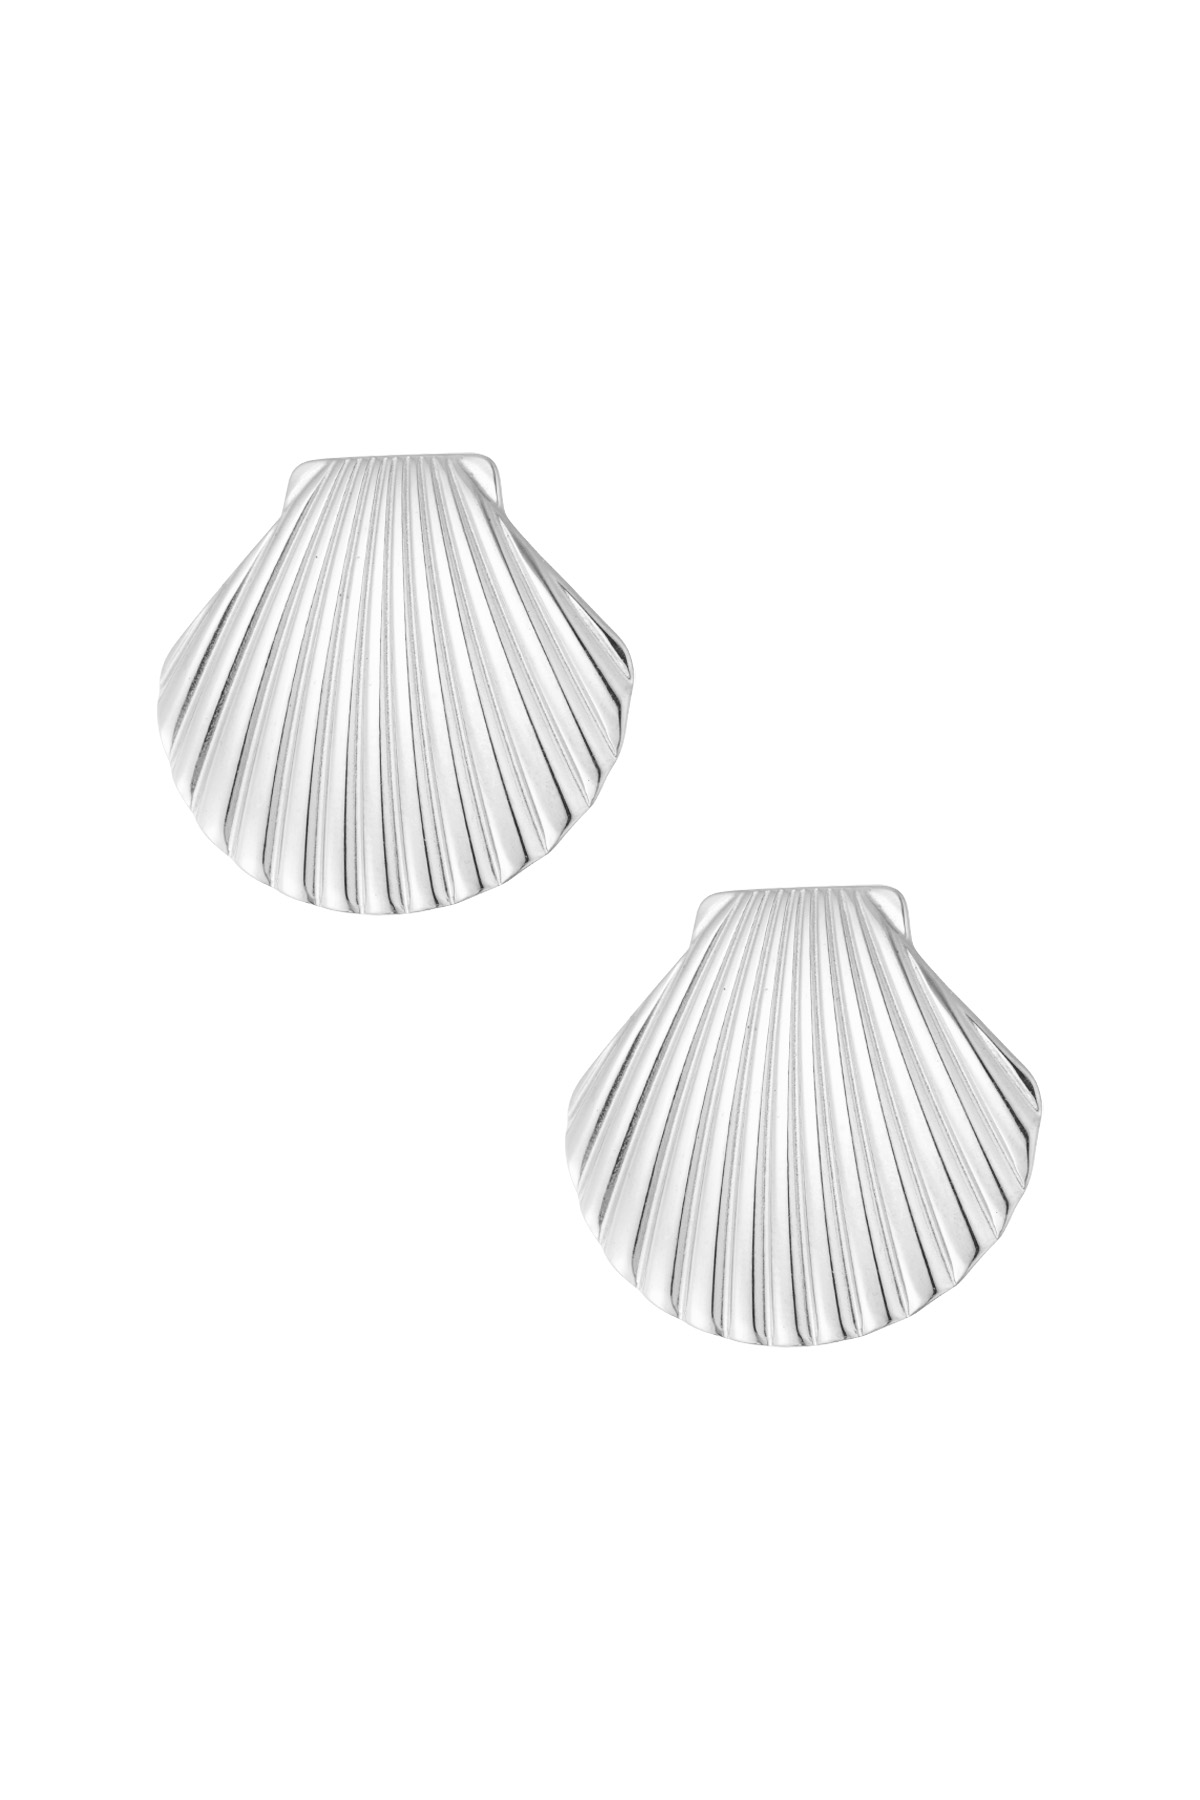 Shell statement earrings - silver h5 